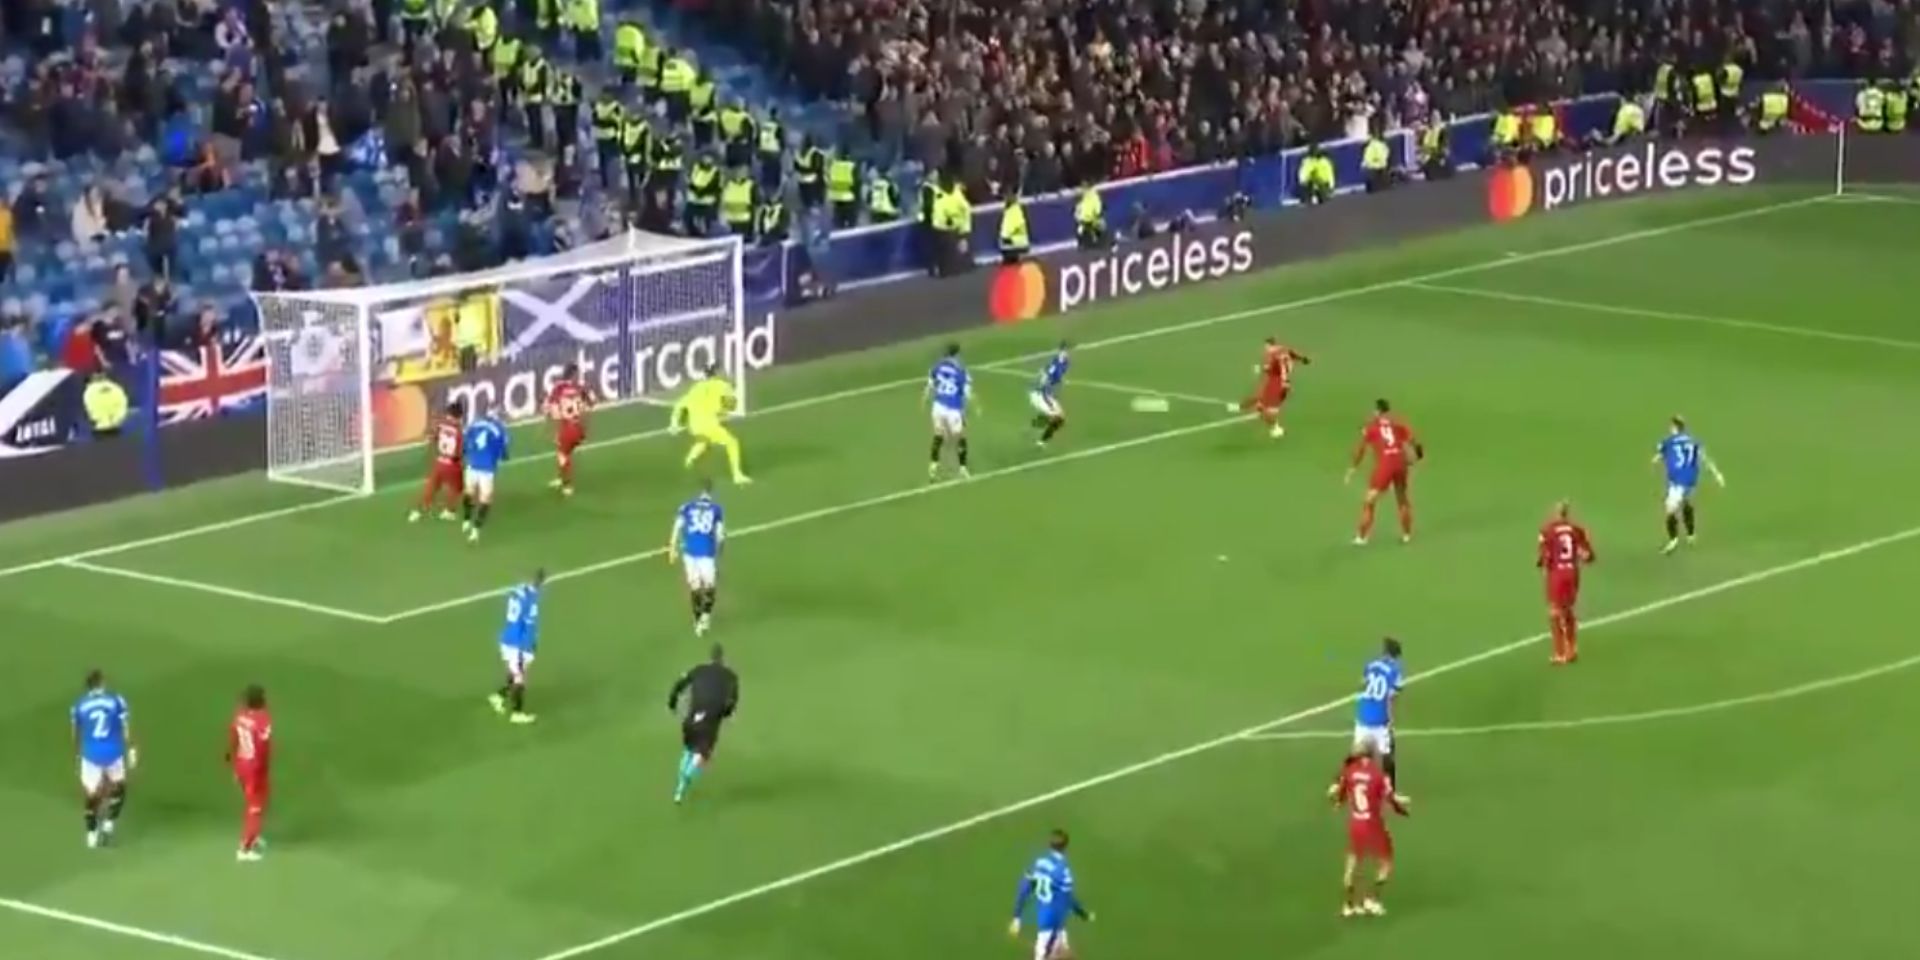 (Video) Harvey Elliott scores his first Champions League goal to make it 7-1 against Rangers